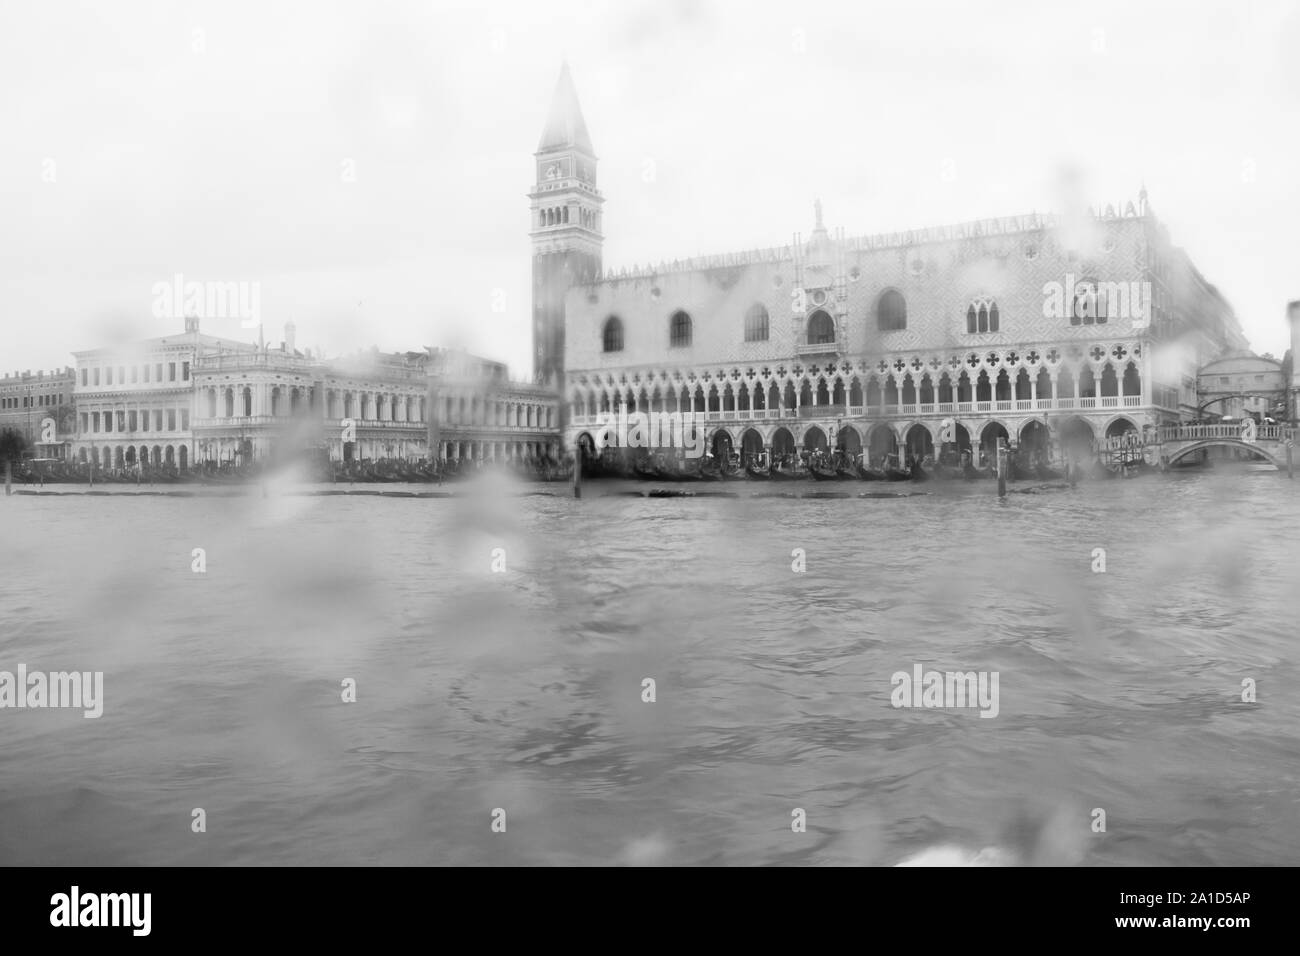 Venedig im Regen - Rainy Venice Stock Photo